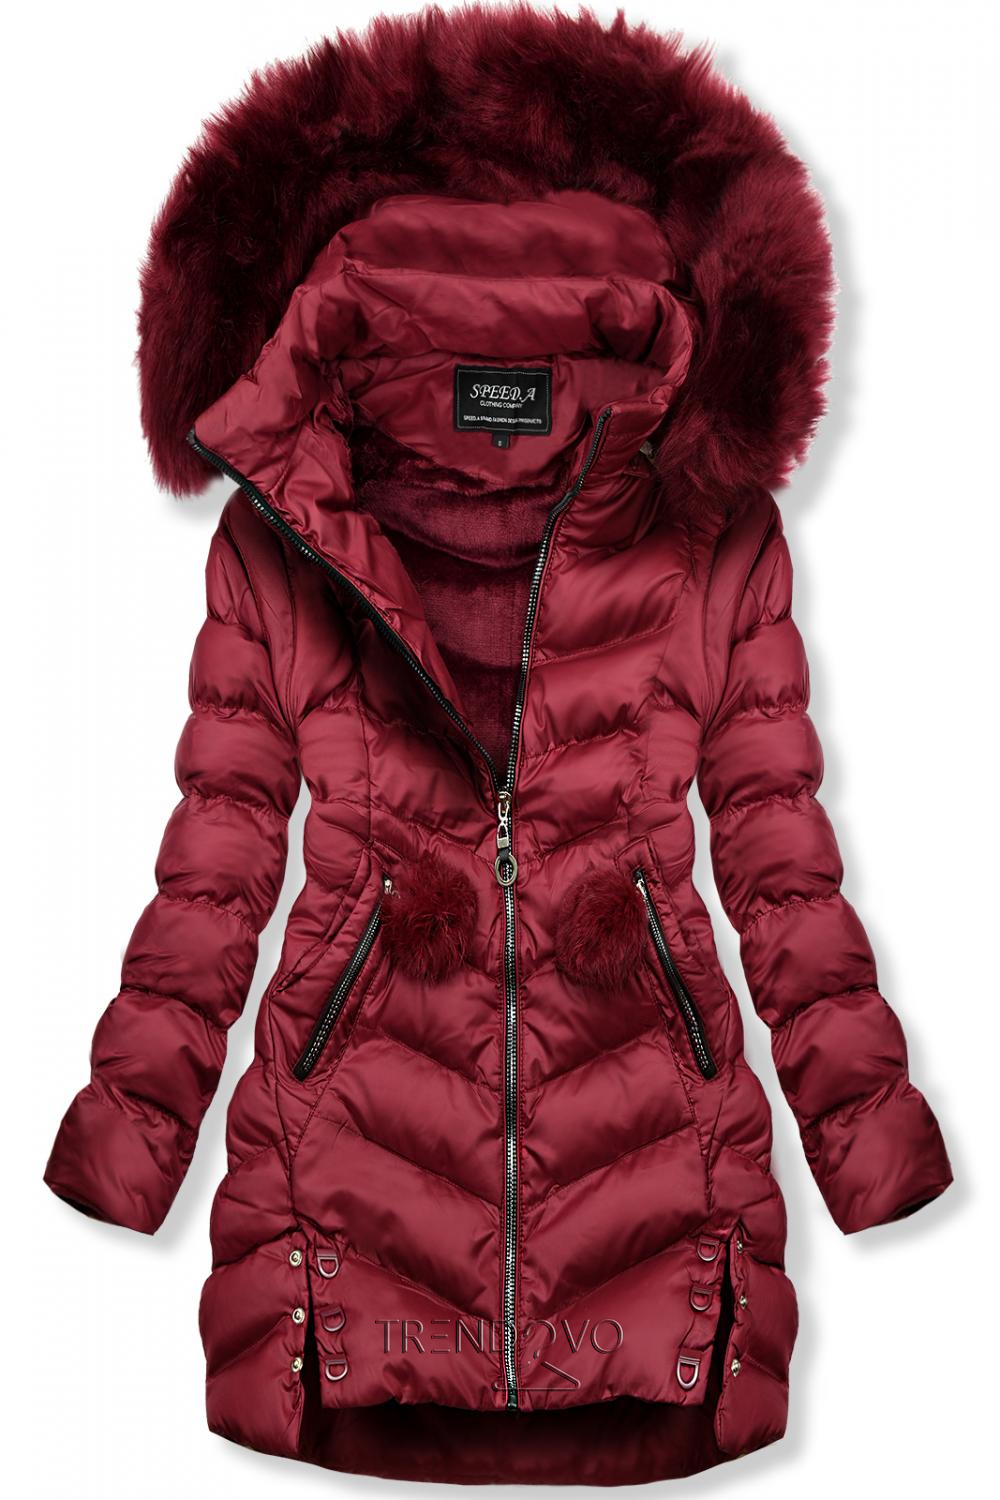 Tmavočervená zimná bunda/vesta